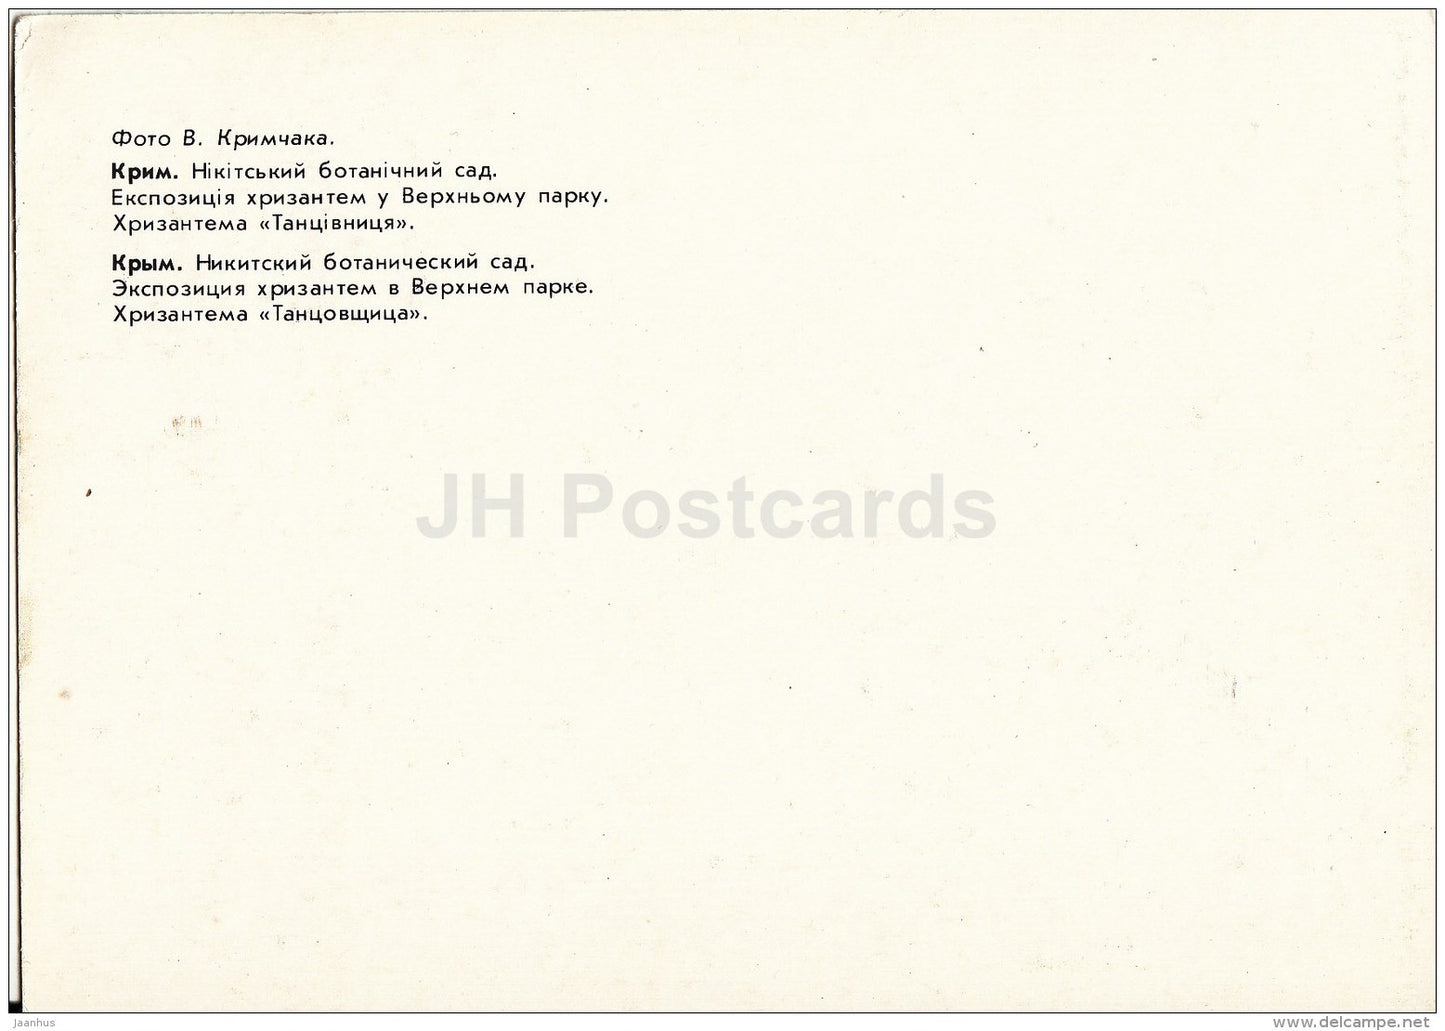 Exhibition of Chrysantemums - Chrysantemum Dancer - Nikitsky Botanical Garden - 1991 - Ukraine USSR - unused - JH Postcards